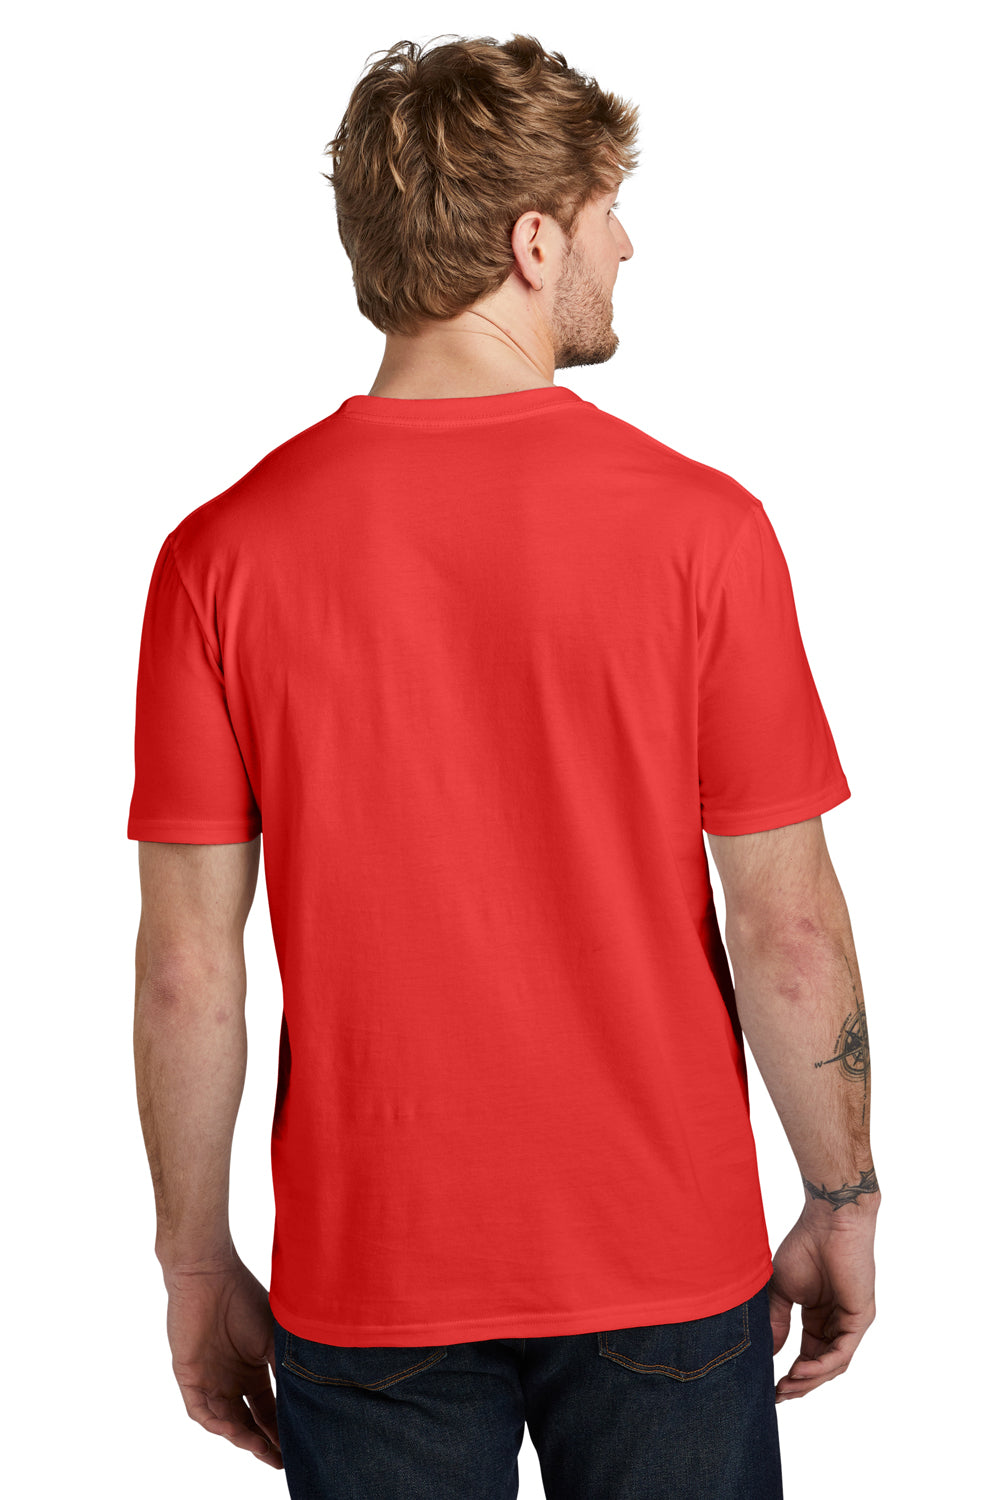 Volunteer Knitwear VL45 Daily Short Sleeve Crewneck T-Shirt Flag Red Back